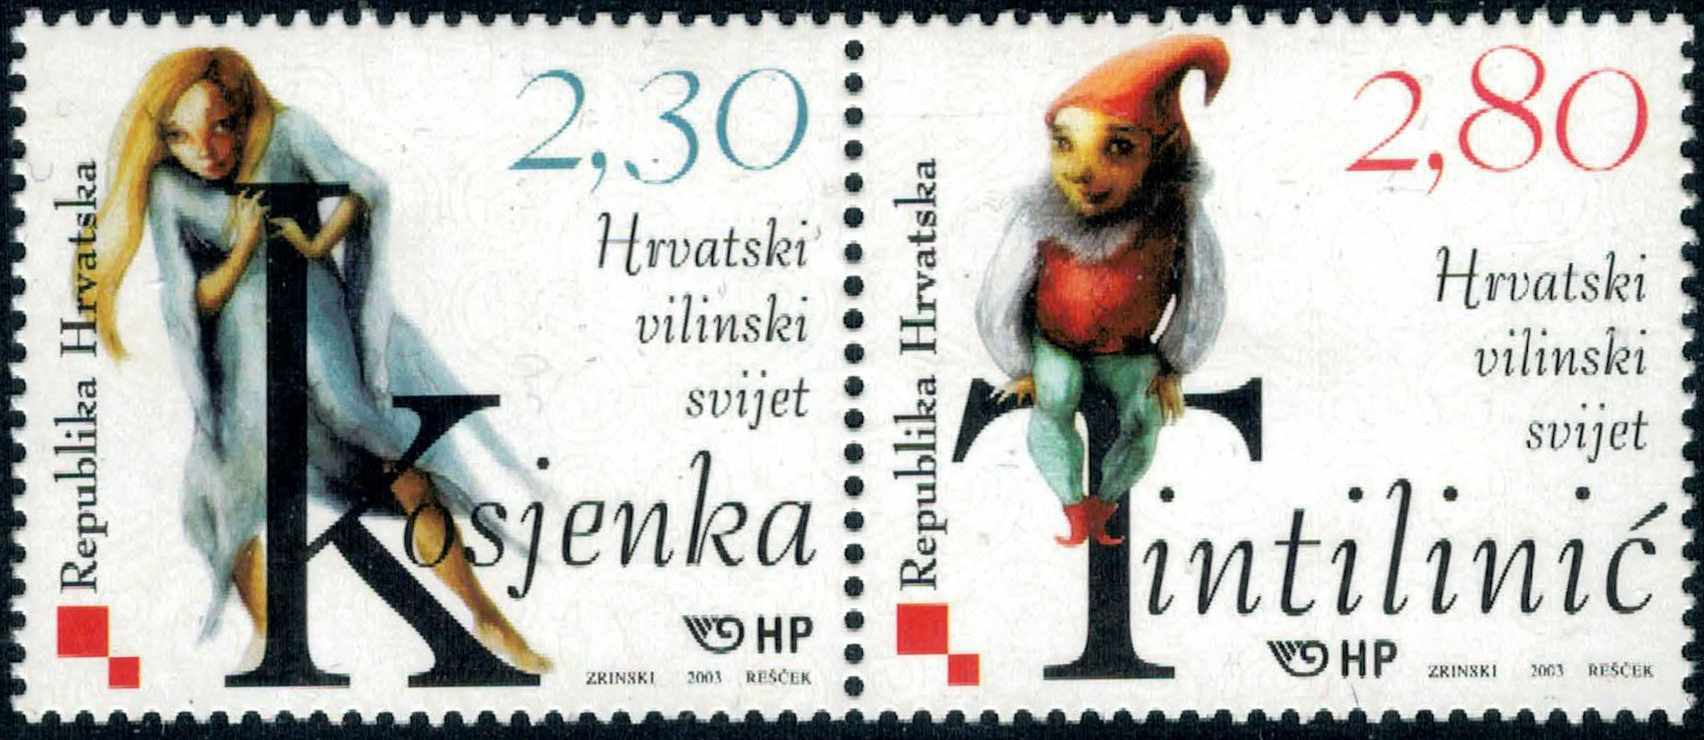 Kosjenka and Tintilini&#263;